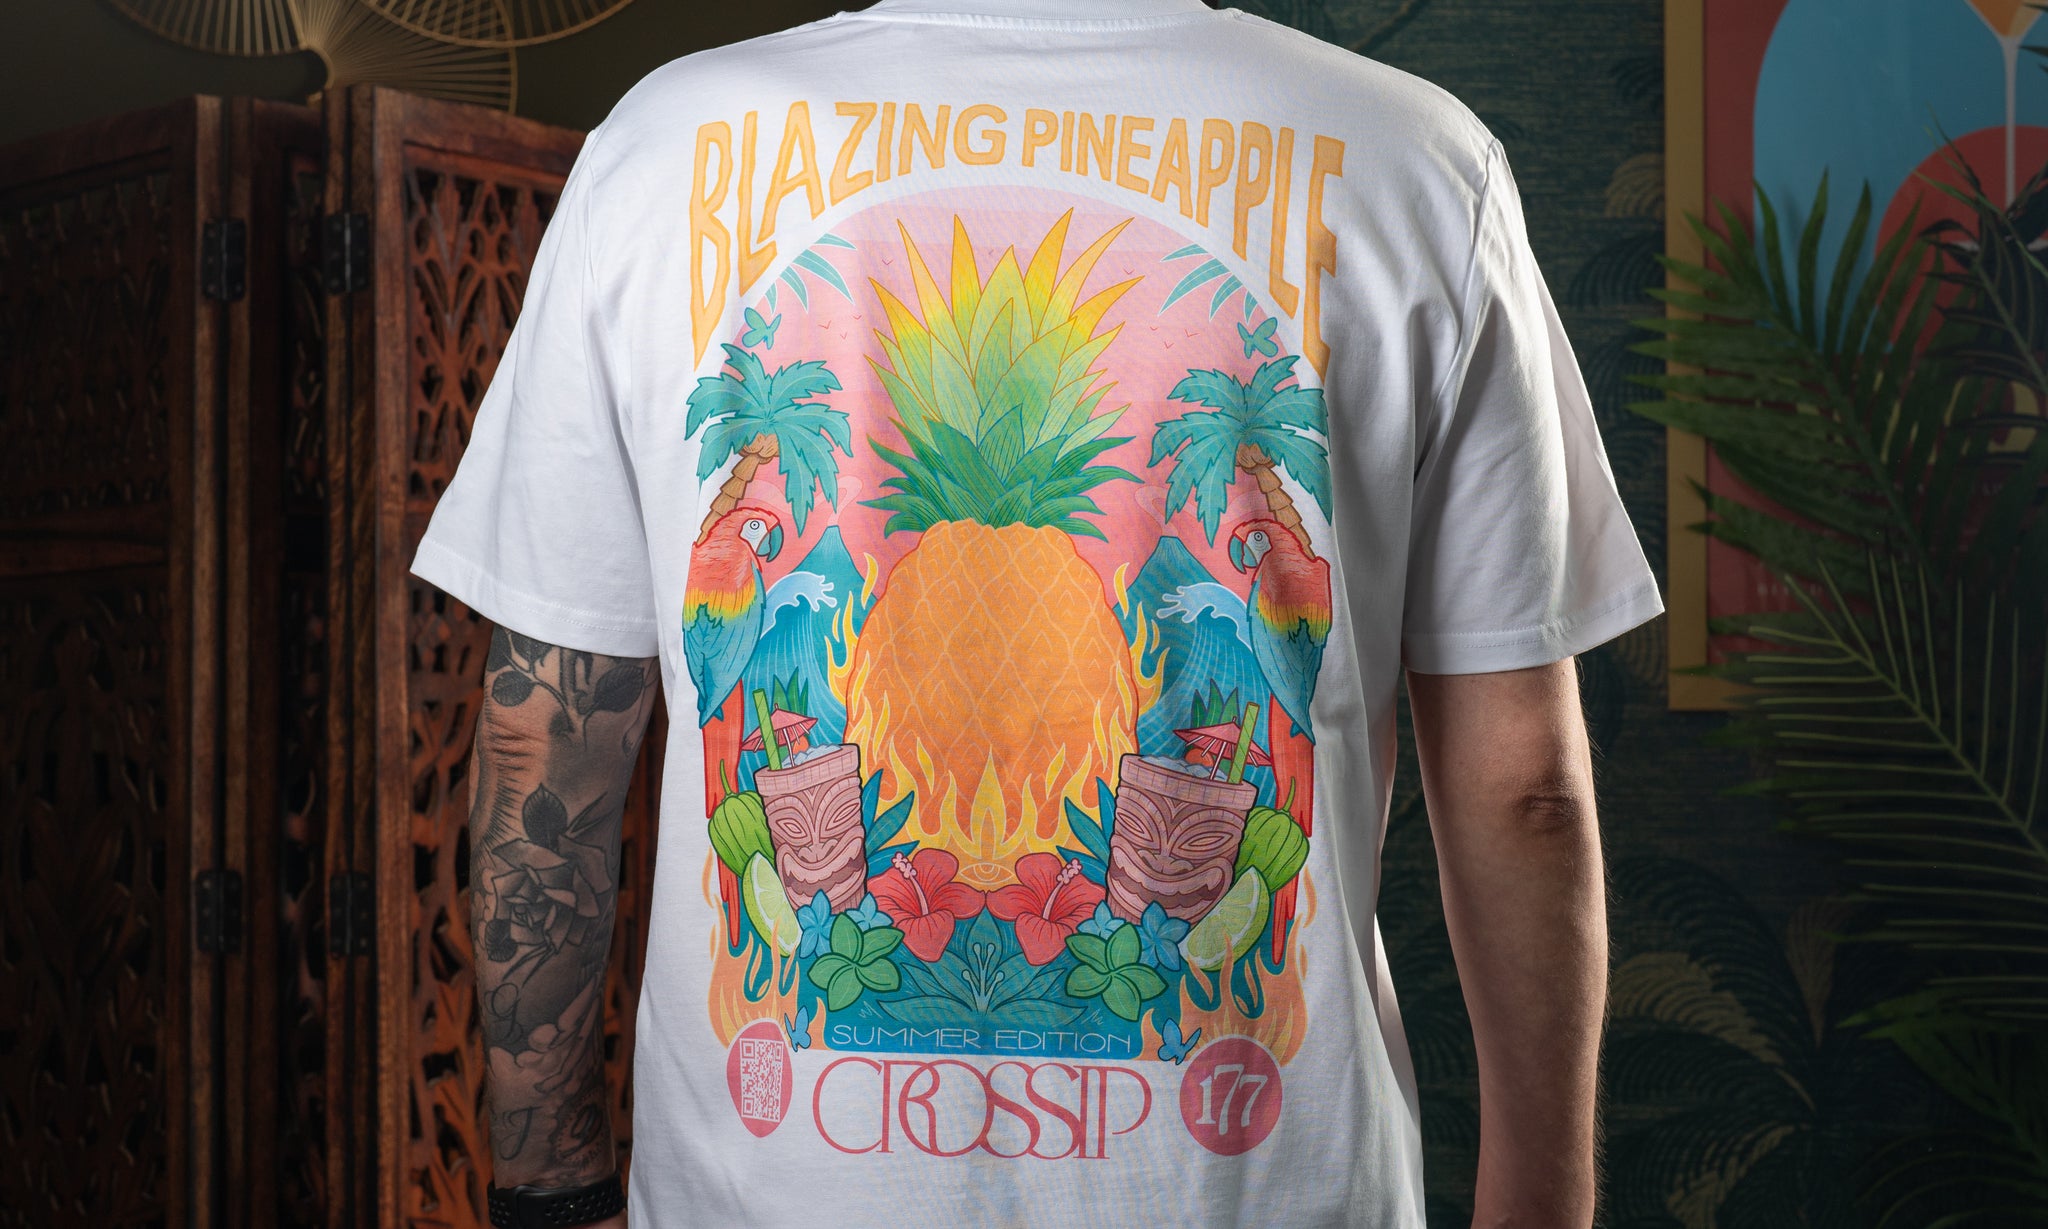 Blazing Pineapple T-shirt